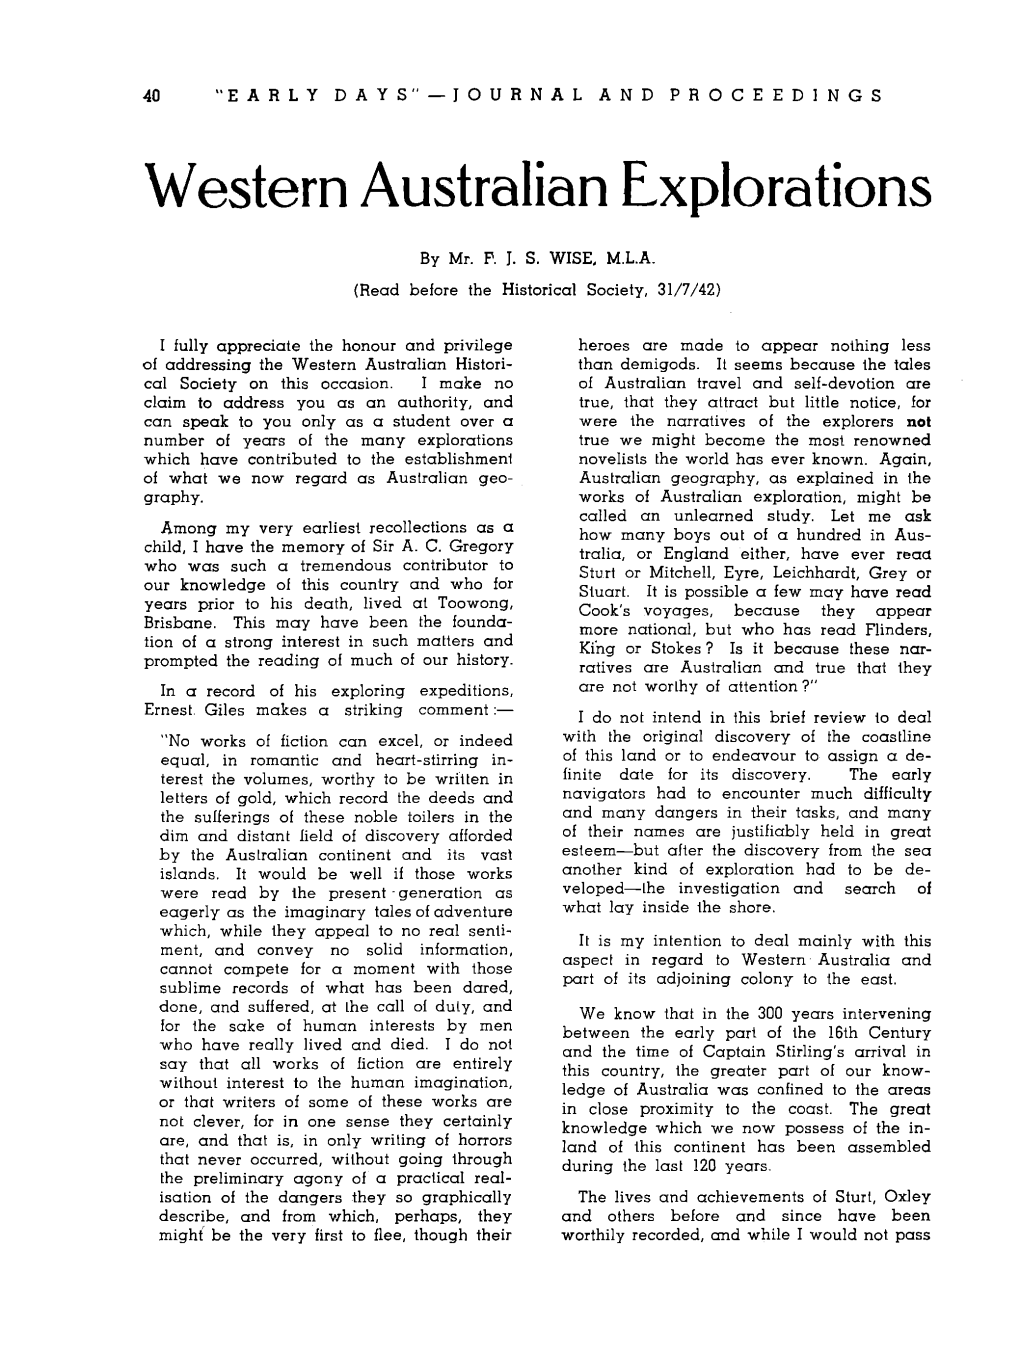 Western Australian Explorations